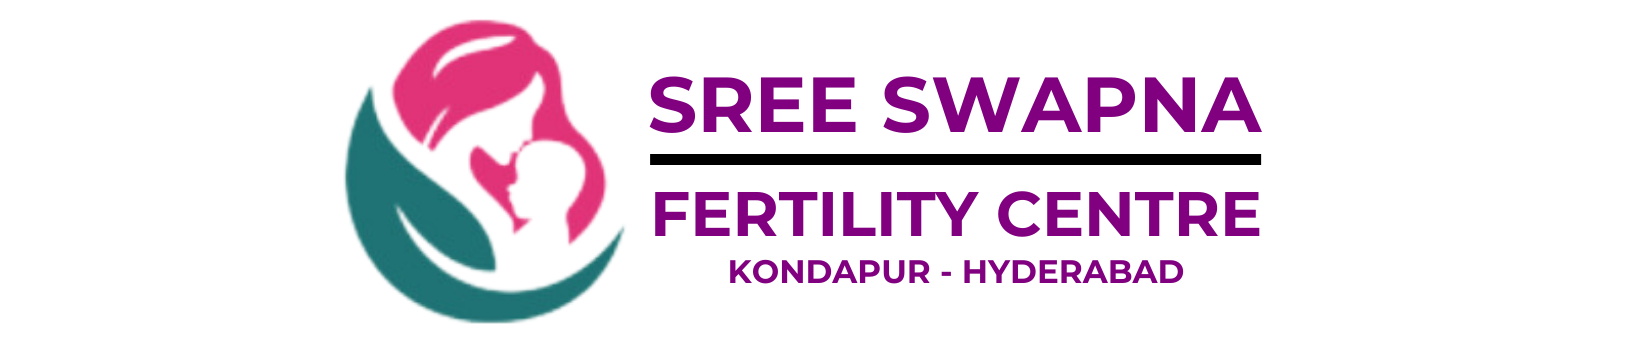 Male infertility – Best Fertility Centre – Dr. Swapna Naik